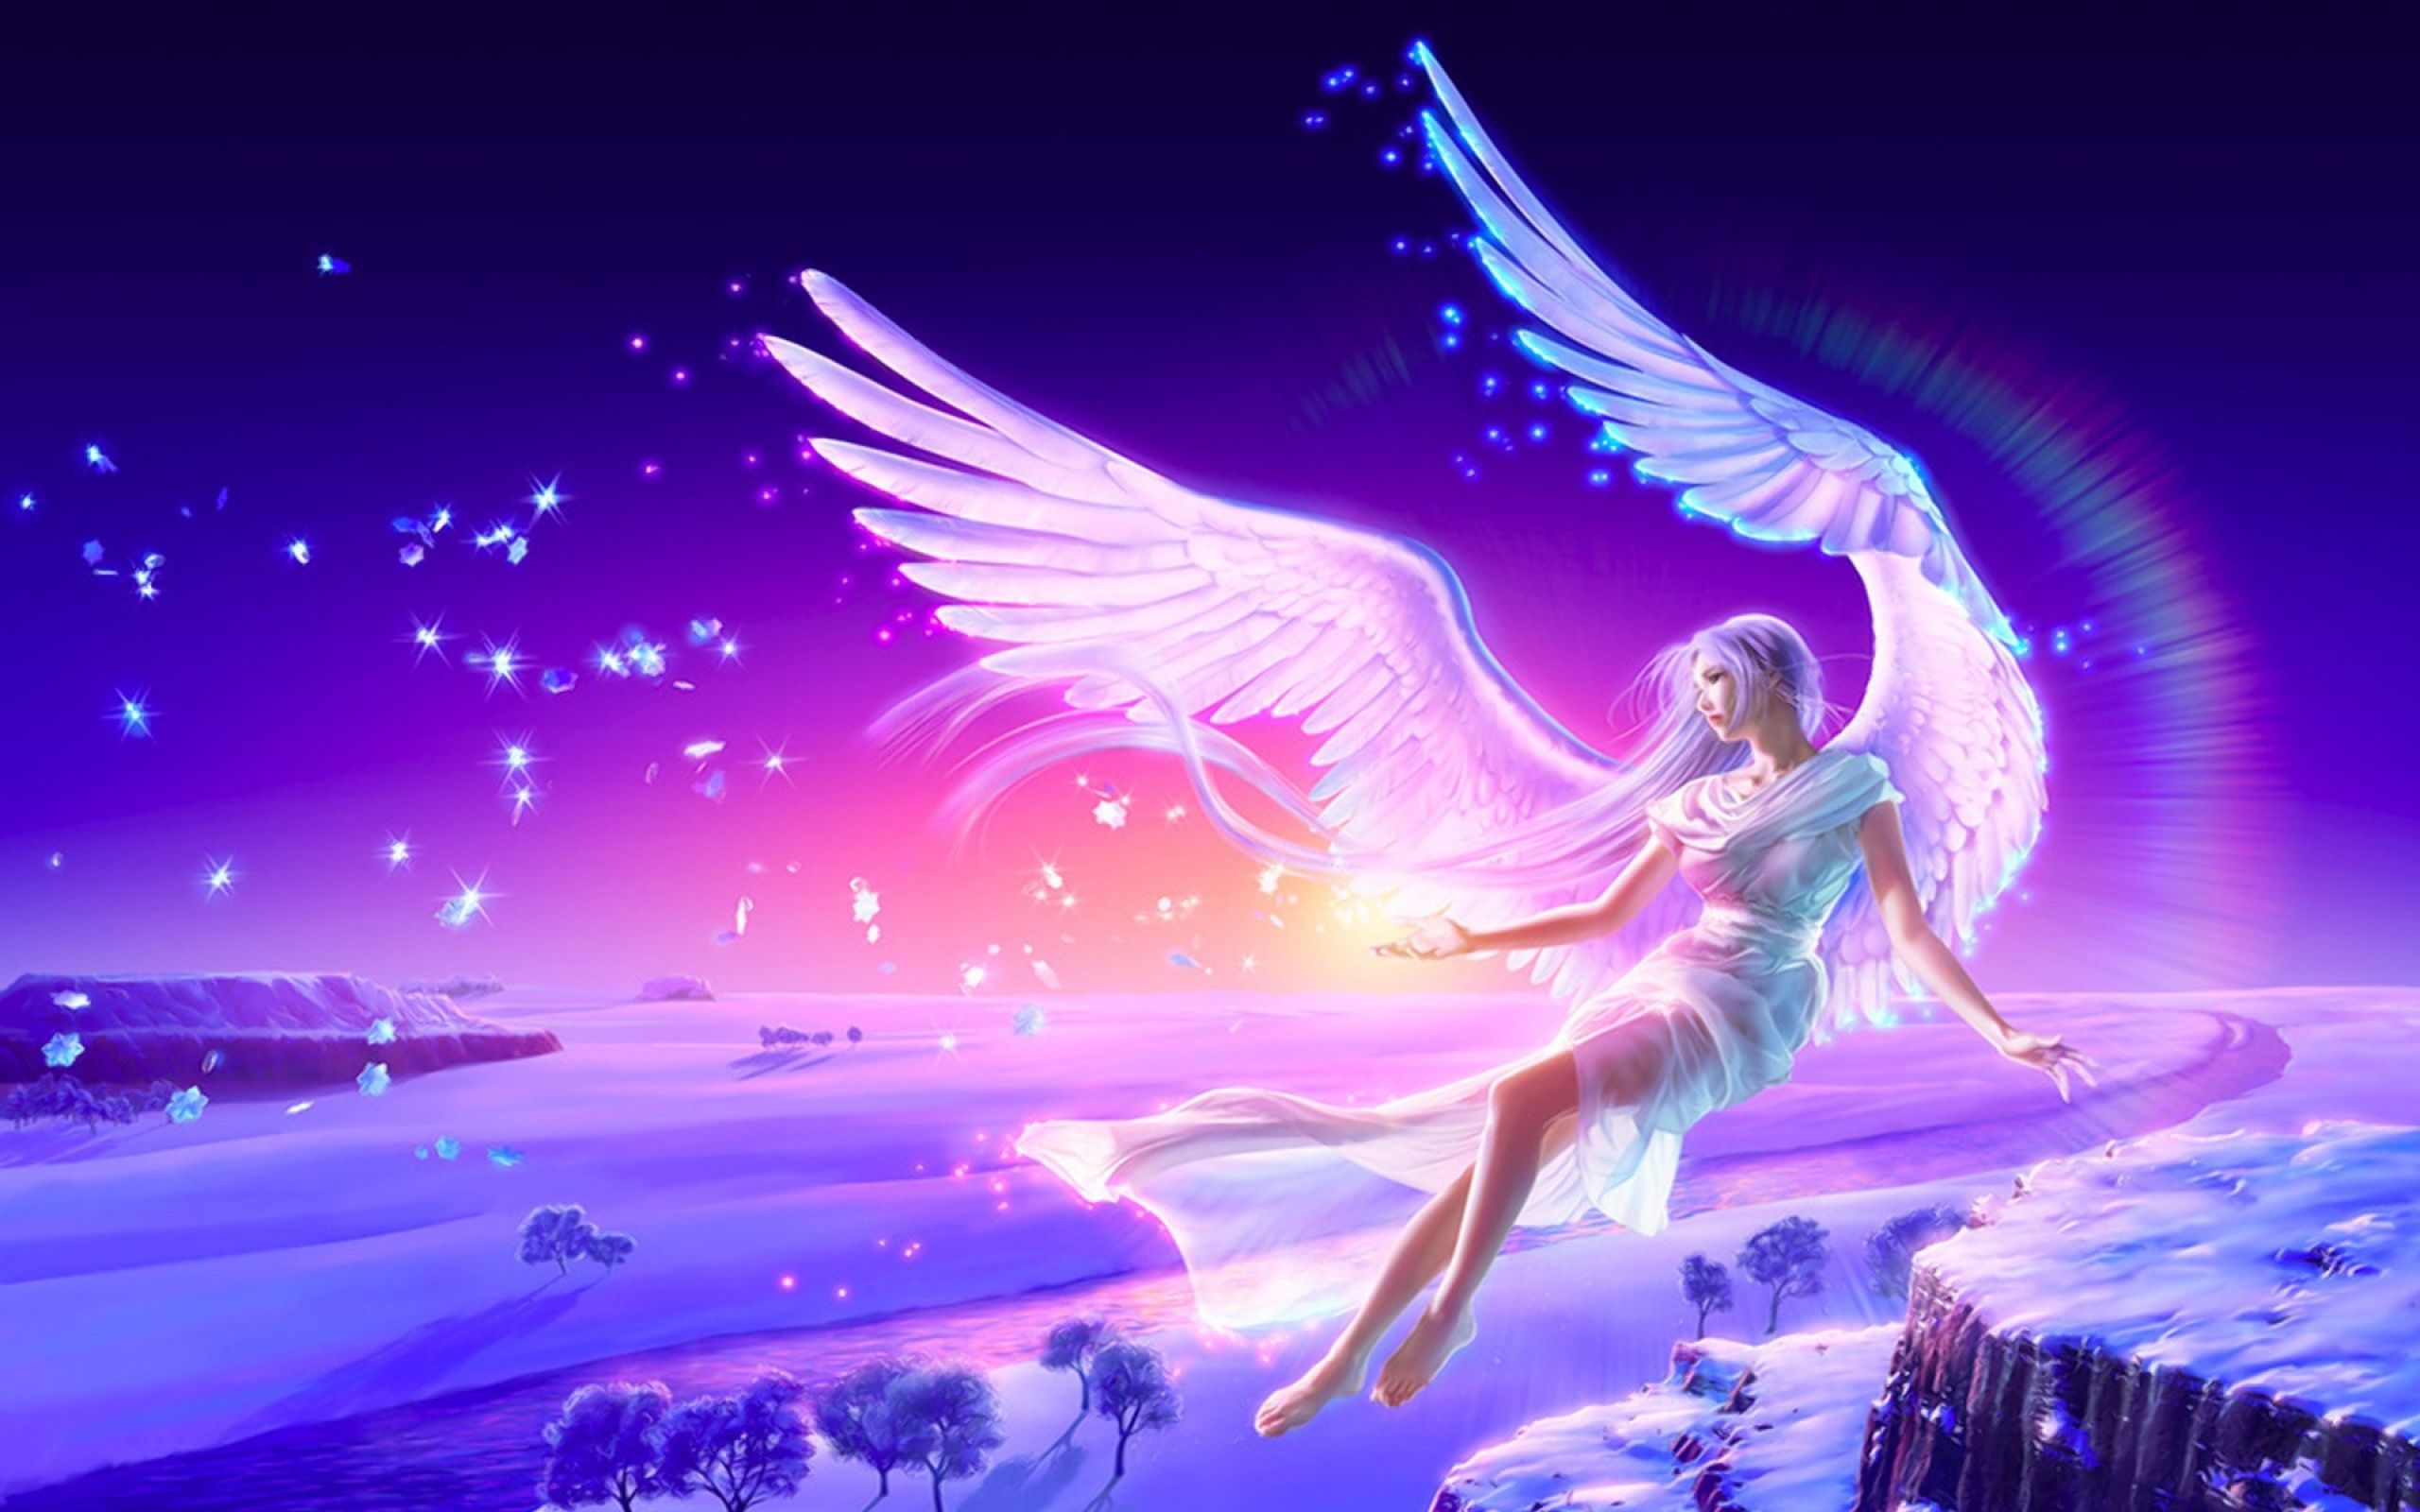 White Angel Blue Girl with Angel Wings Flying Fantasy Art Ultra HD Wallpaper for Desktop Mobile Phones Tablet and Laptops, Wallpaper13.com